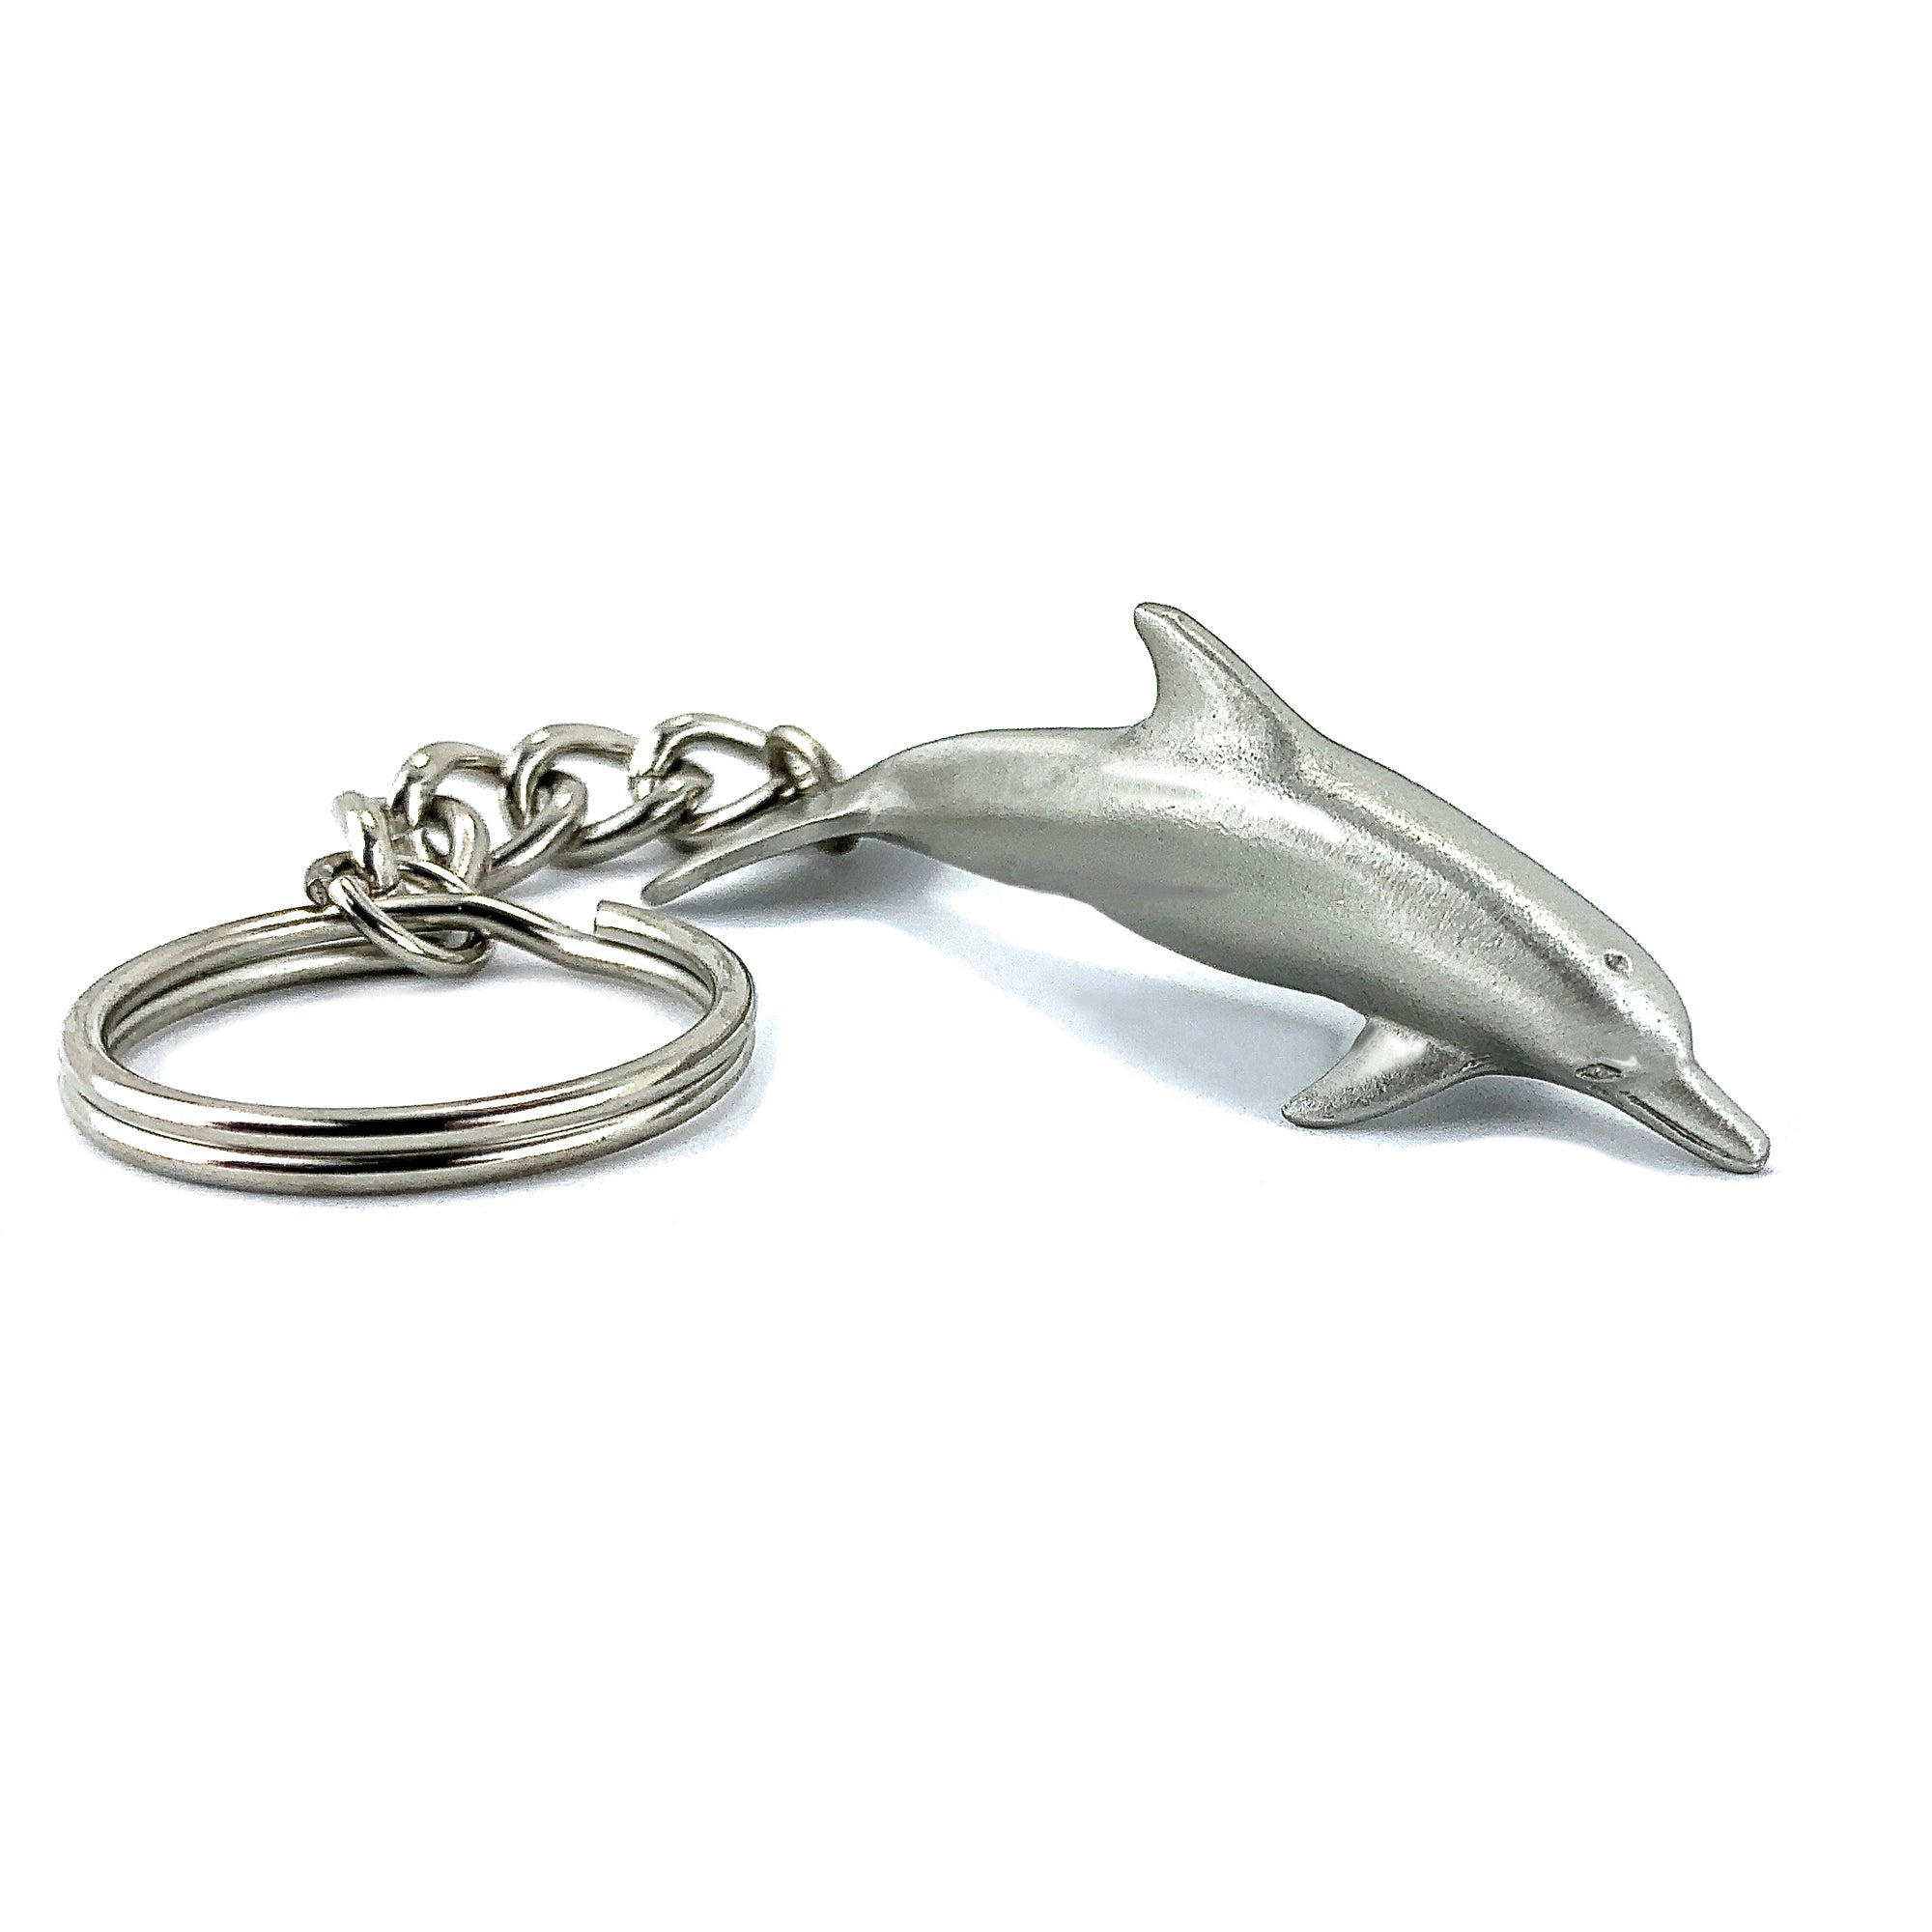 Huertuer Keyfob Cute Delicate Resin Gift Key Accessories Marine Animal Beluga Keychain_White Lover Gift